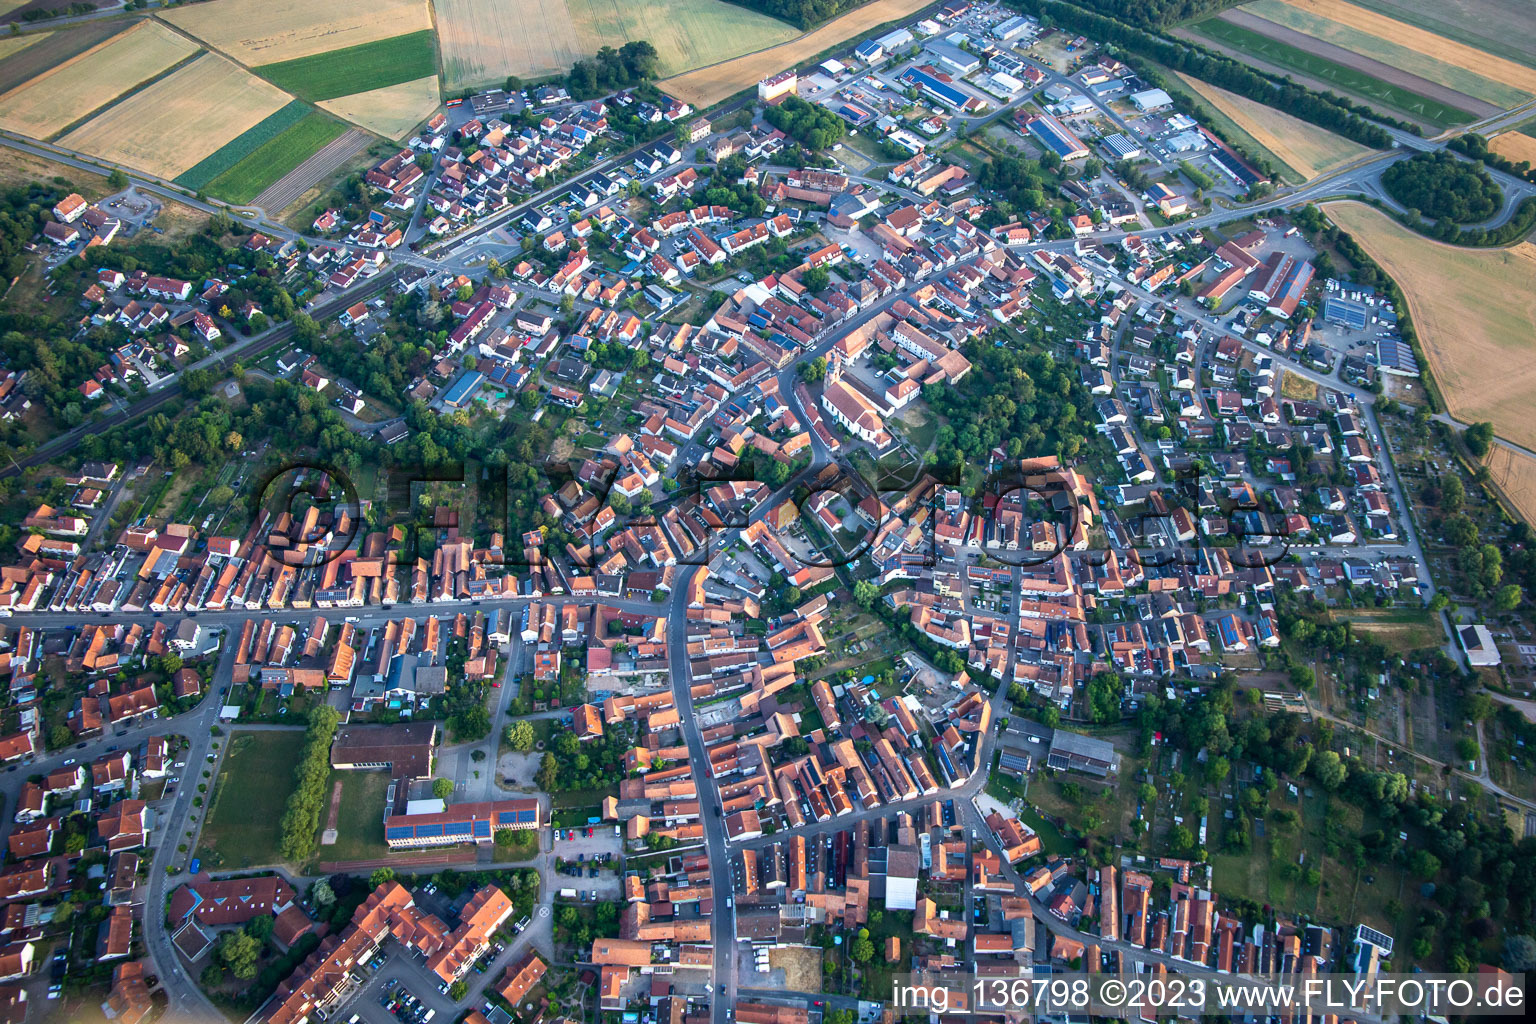 Drone image of Rheinzabern in the state Rhineland-Palatinate, Germany